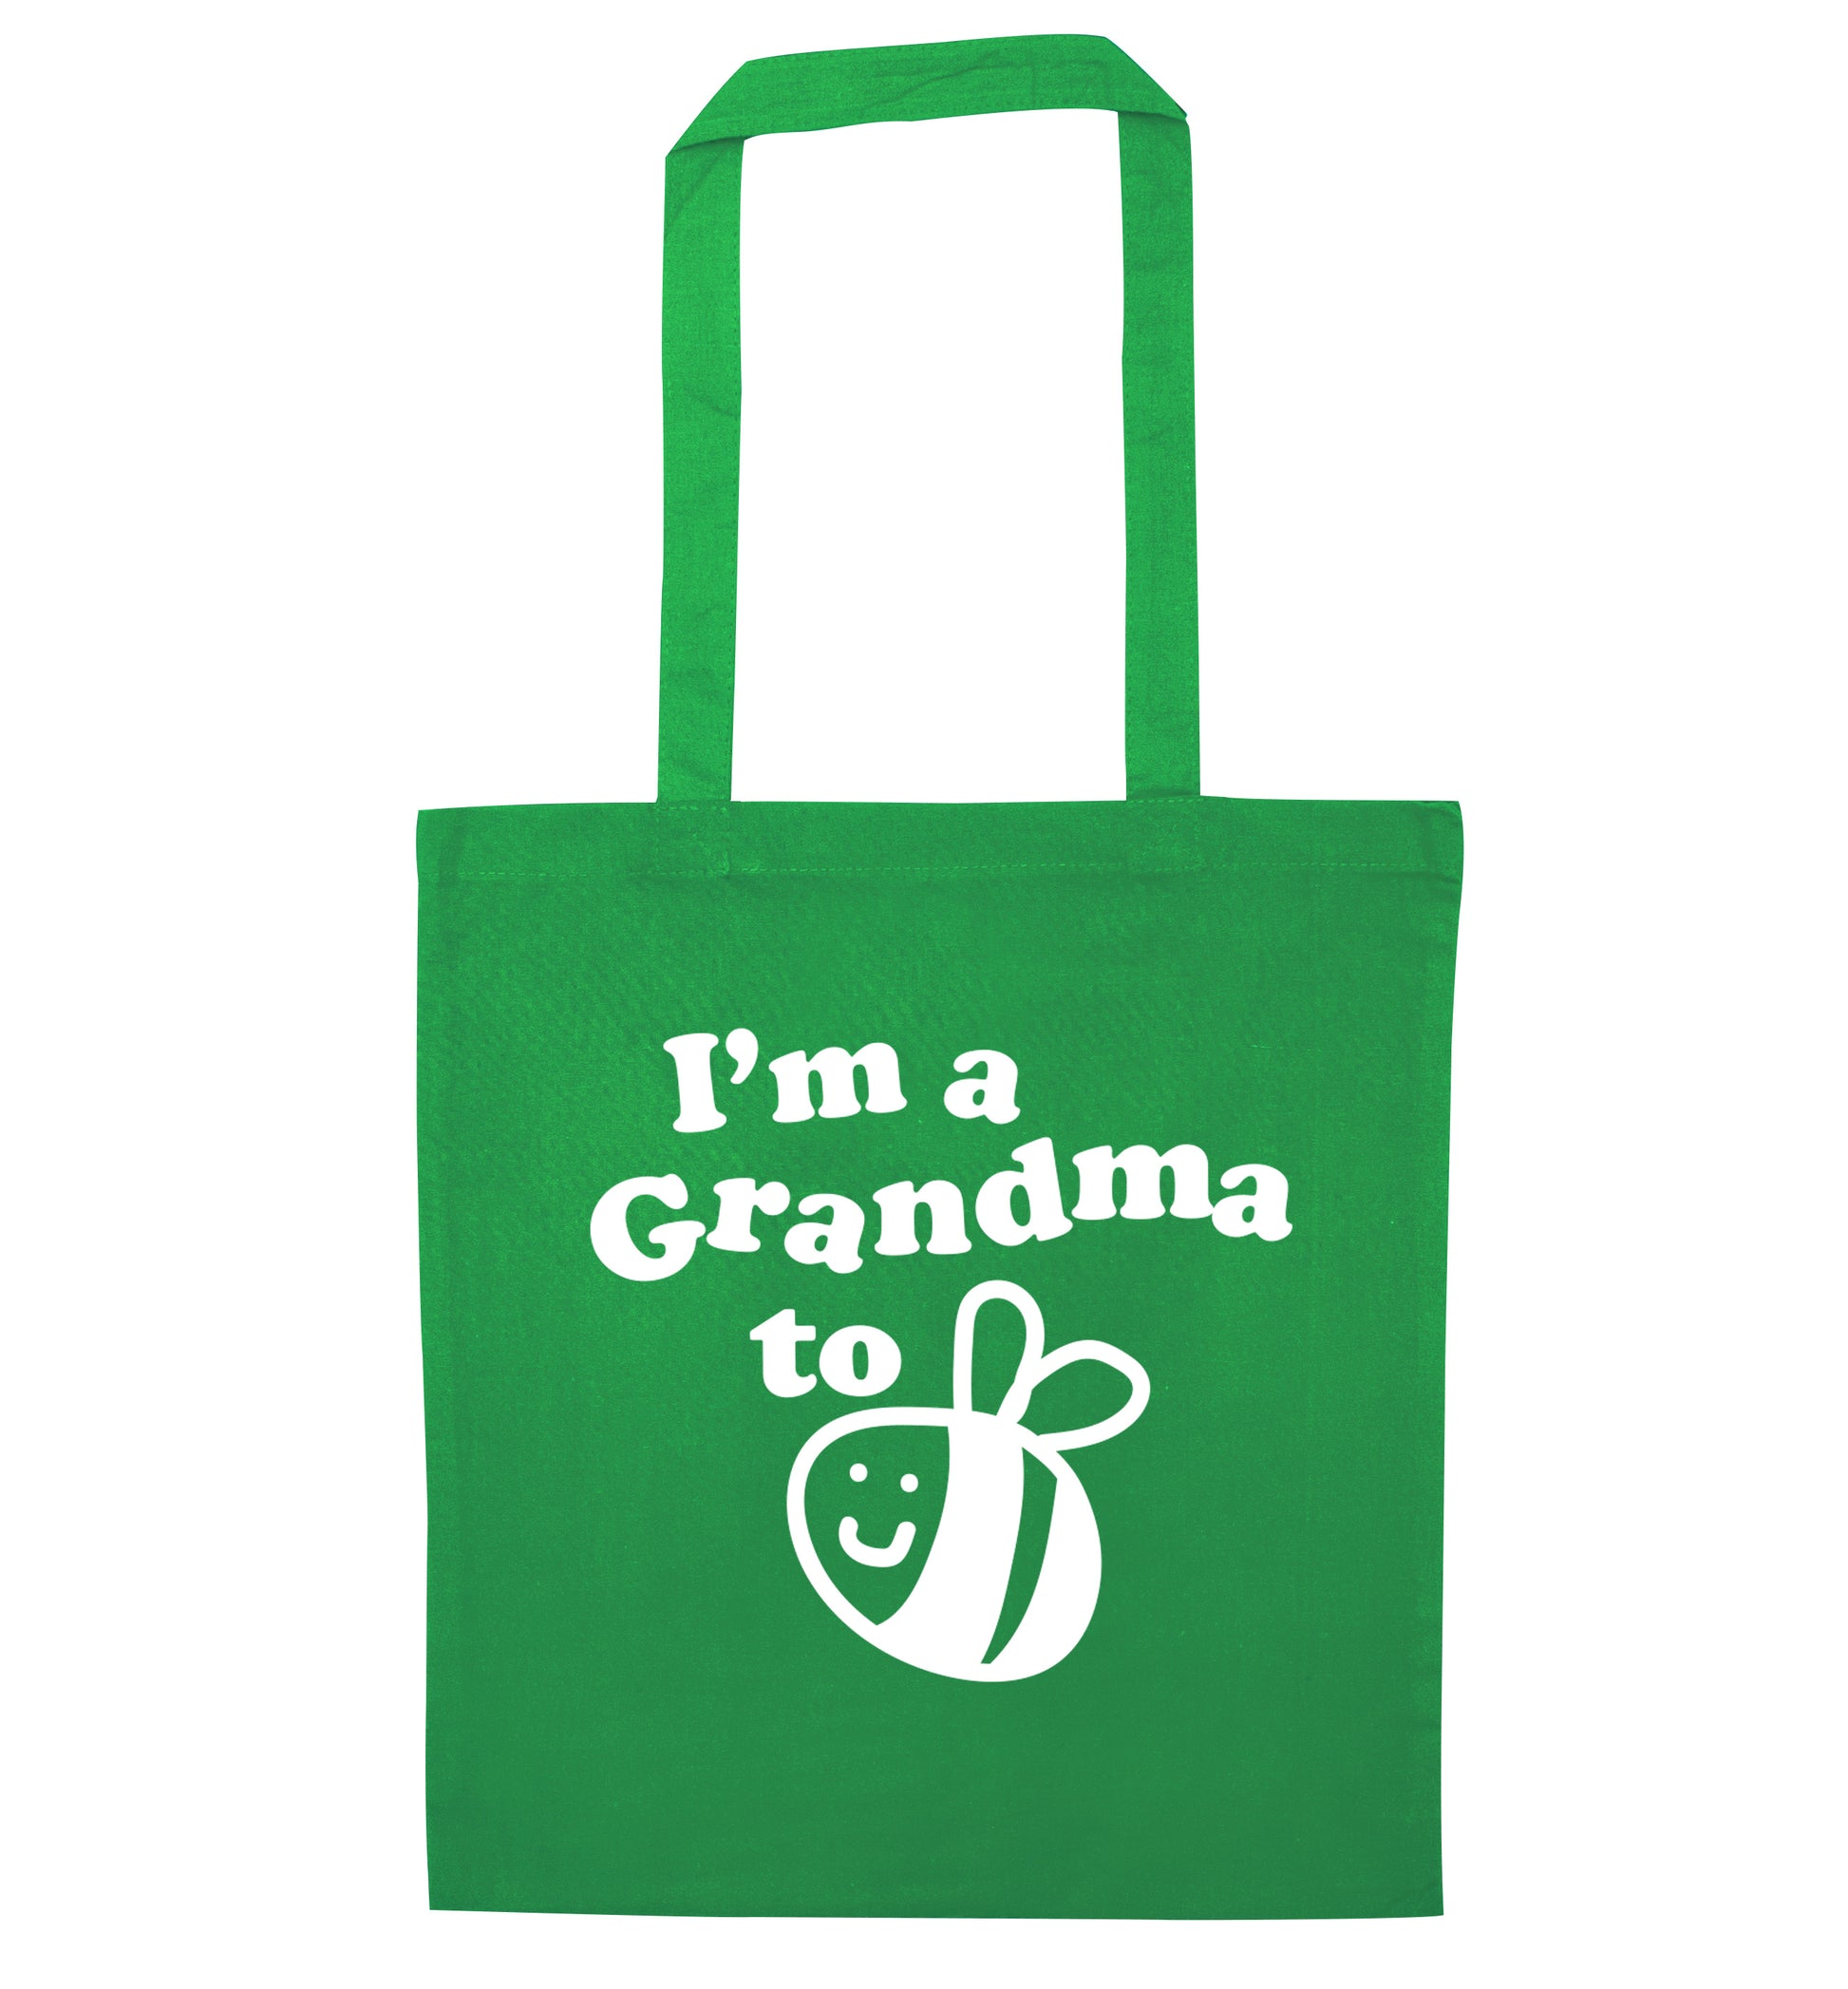 I'm a grandma to be green tote bag